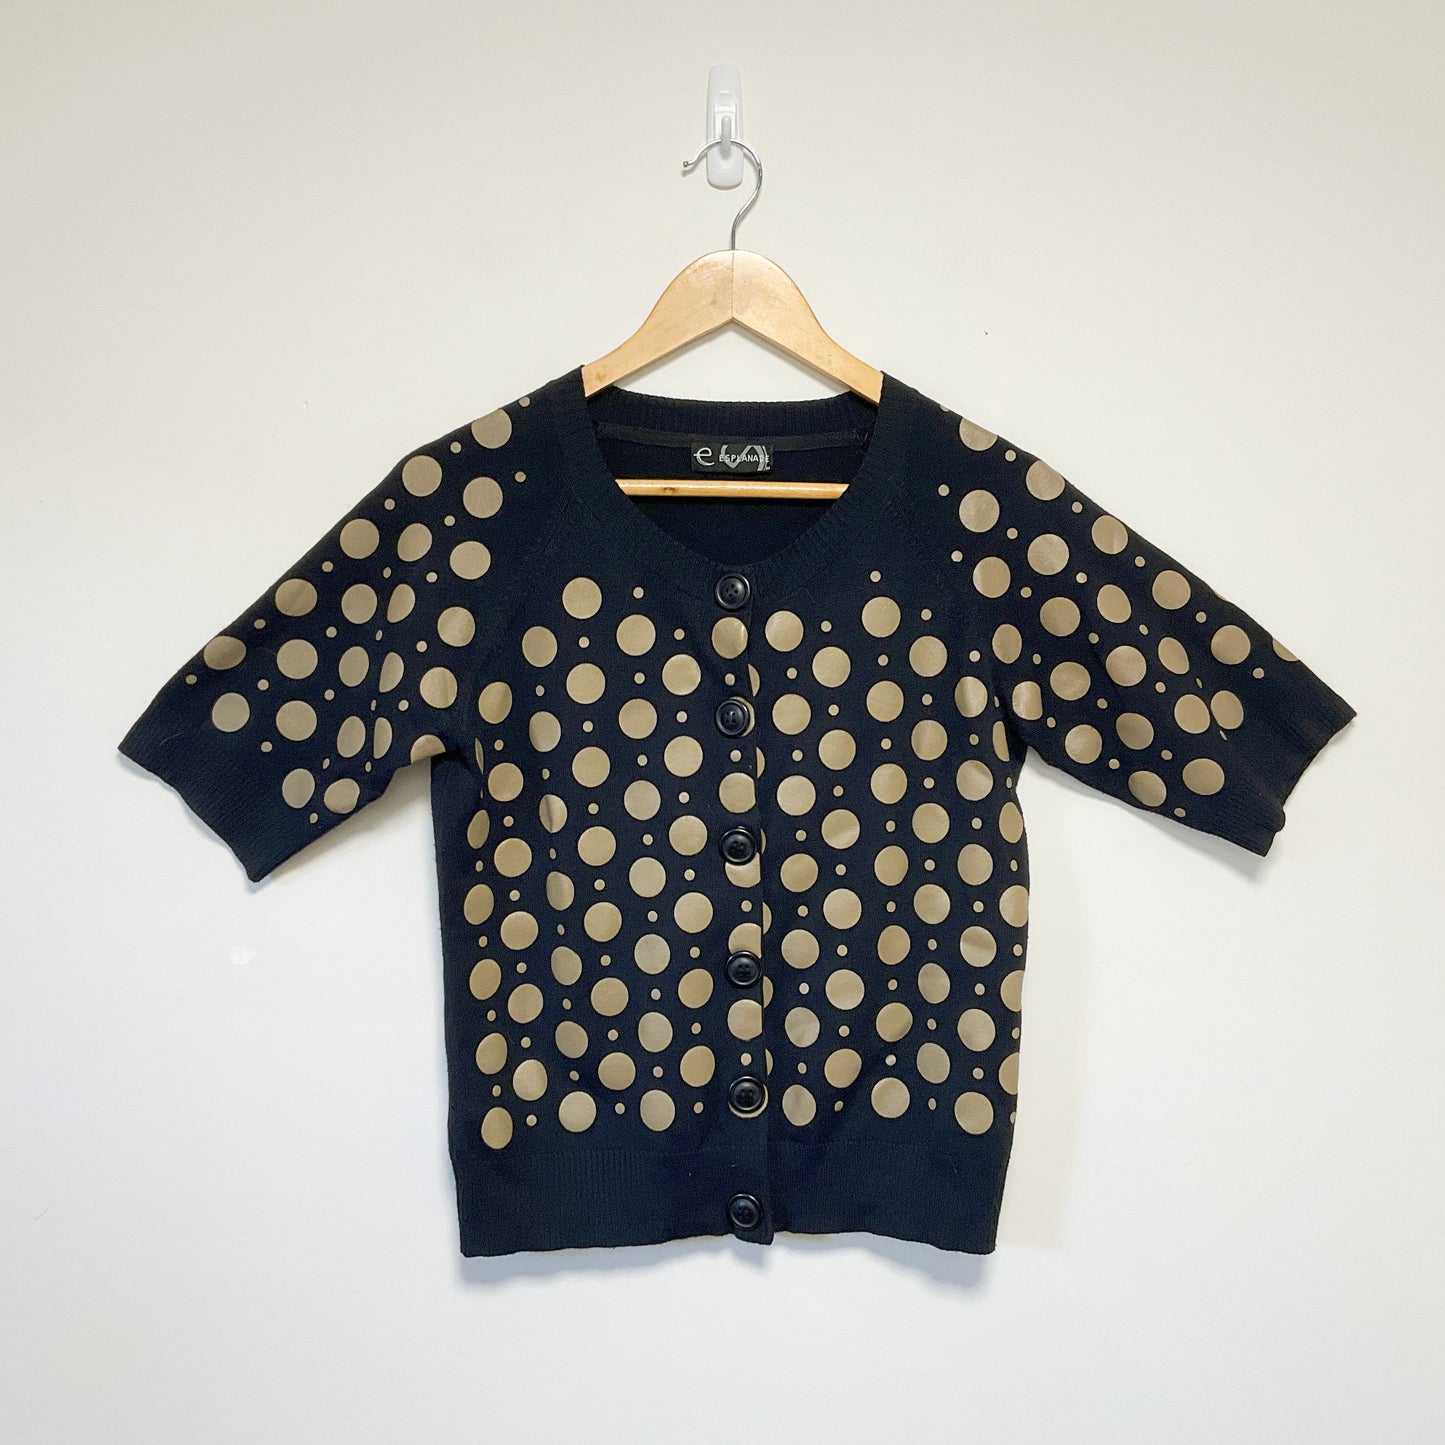 Esplanade - Black Short-sleeved Knitted Top with Golden Polka Dot Pattern